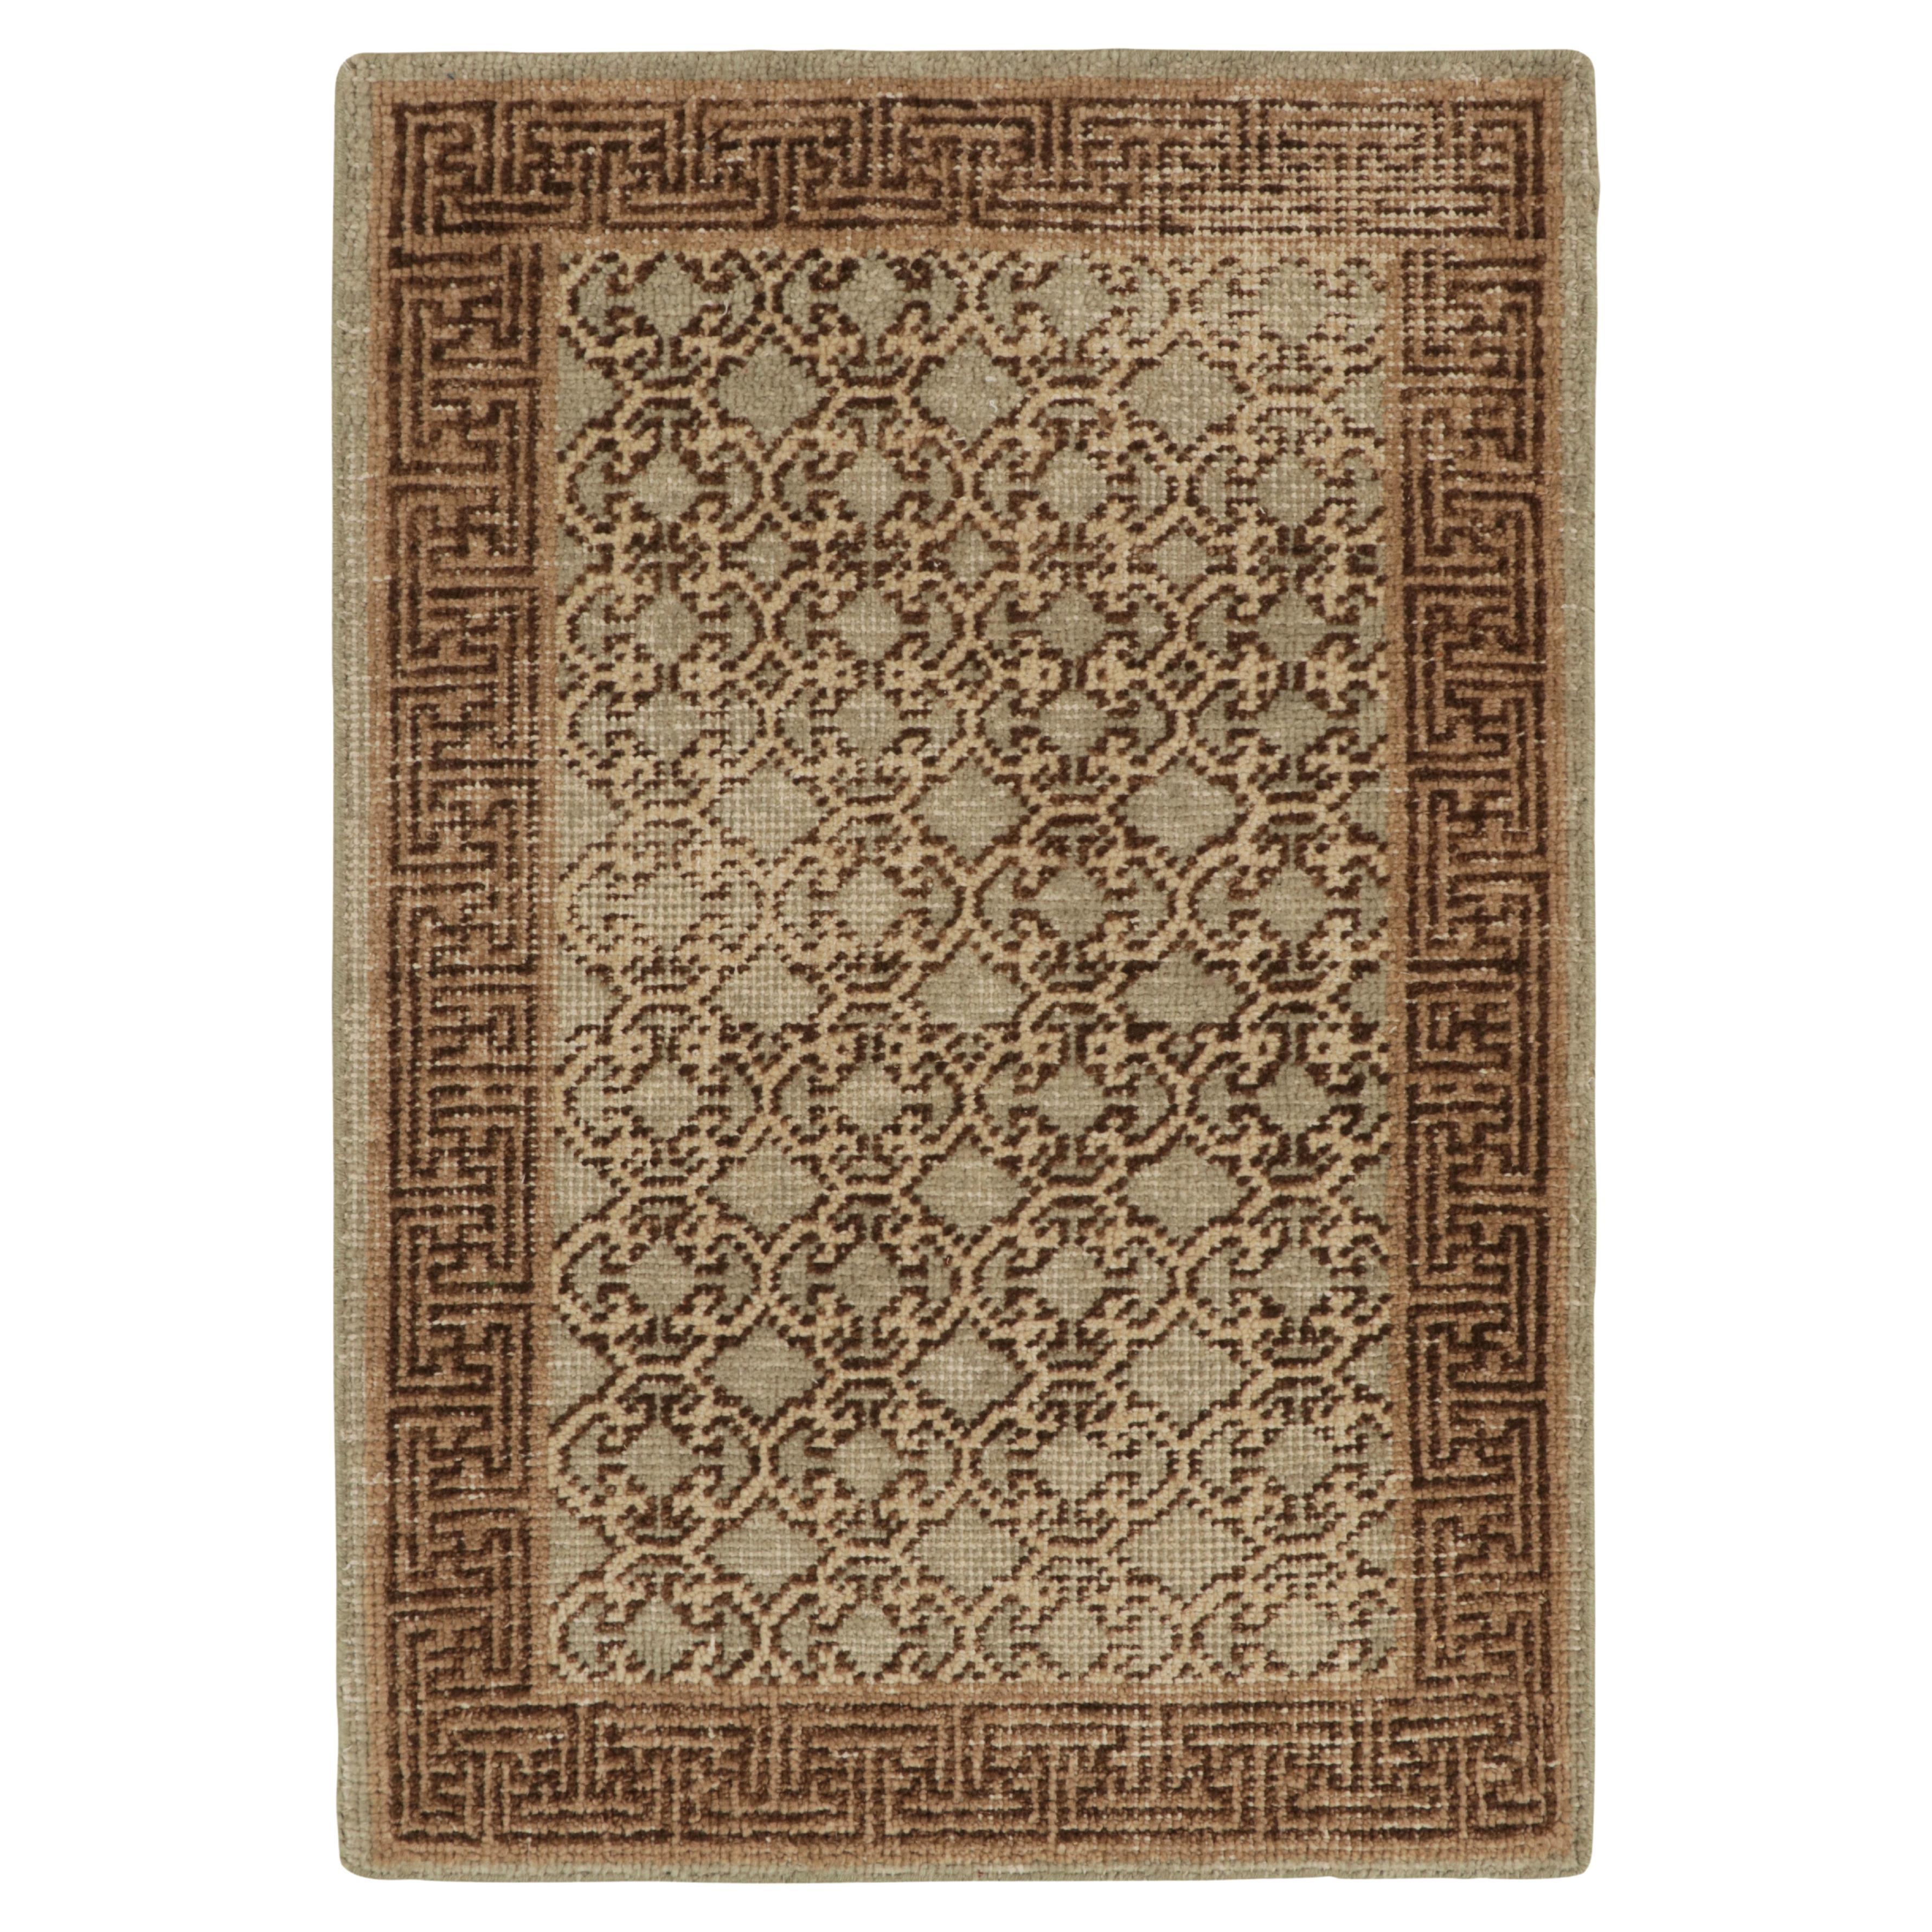 Rug & Kilim’s Distressed Khotan Style Rug in Gray, Beige-Brown Trellis Pattern For Sale